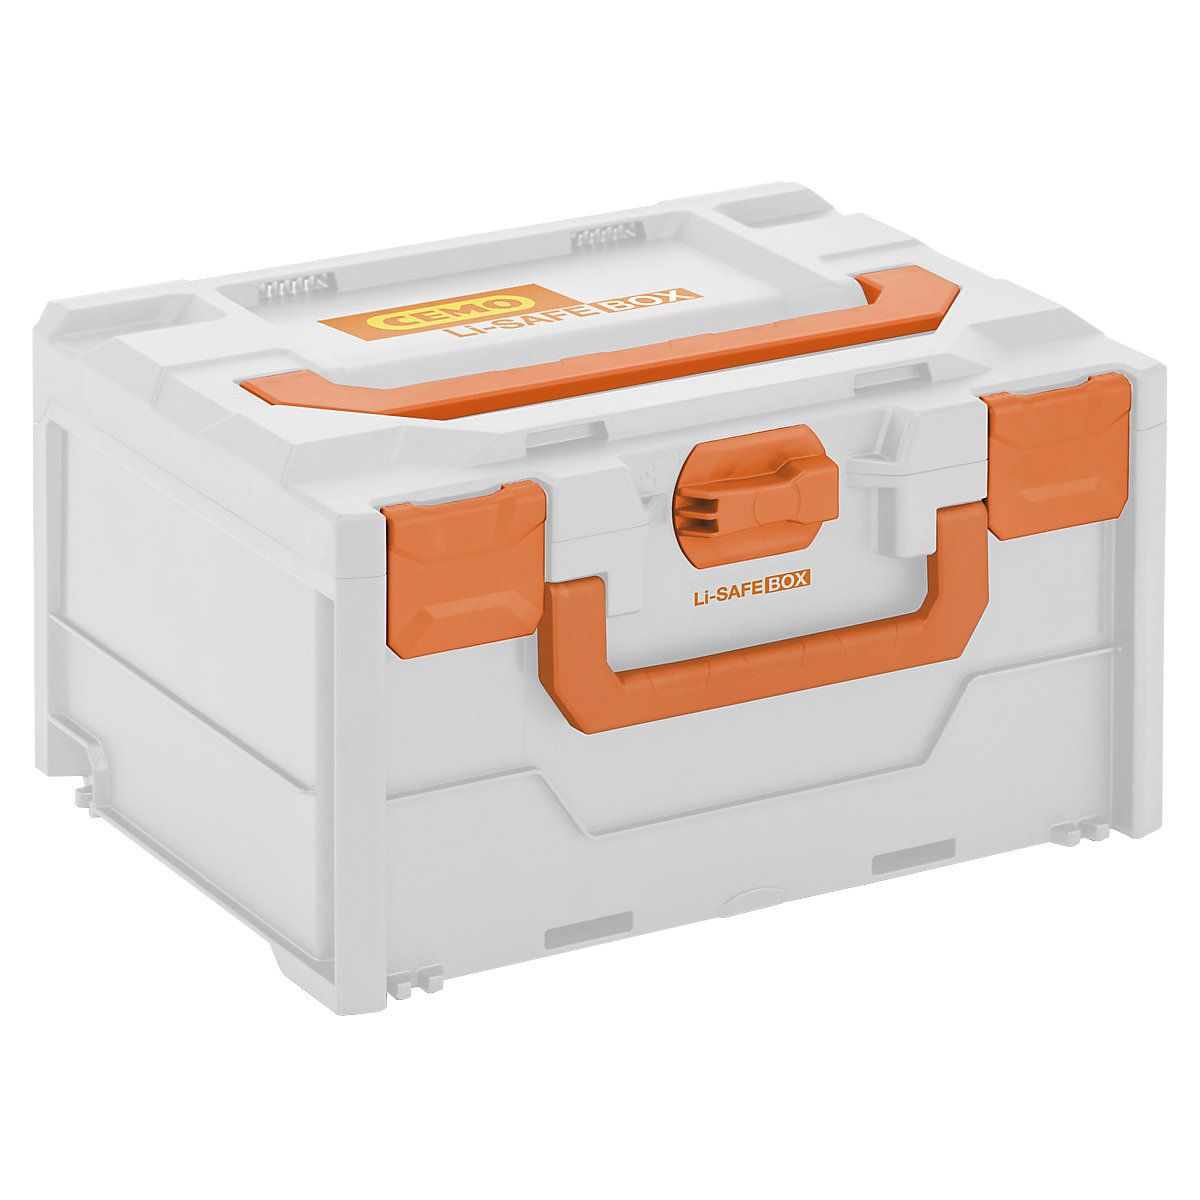 Caja de protección de baterías contra incendios Li-SAFE – CEMO